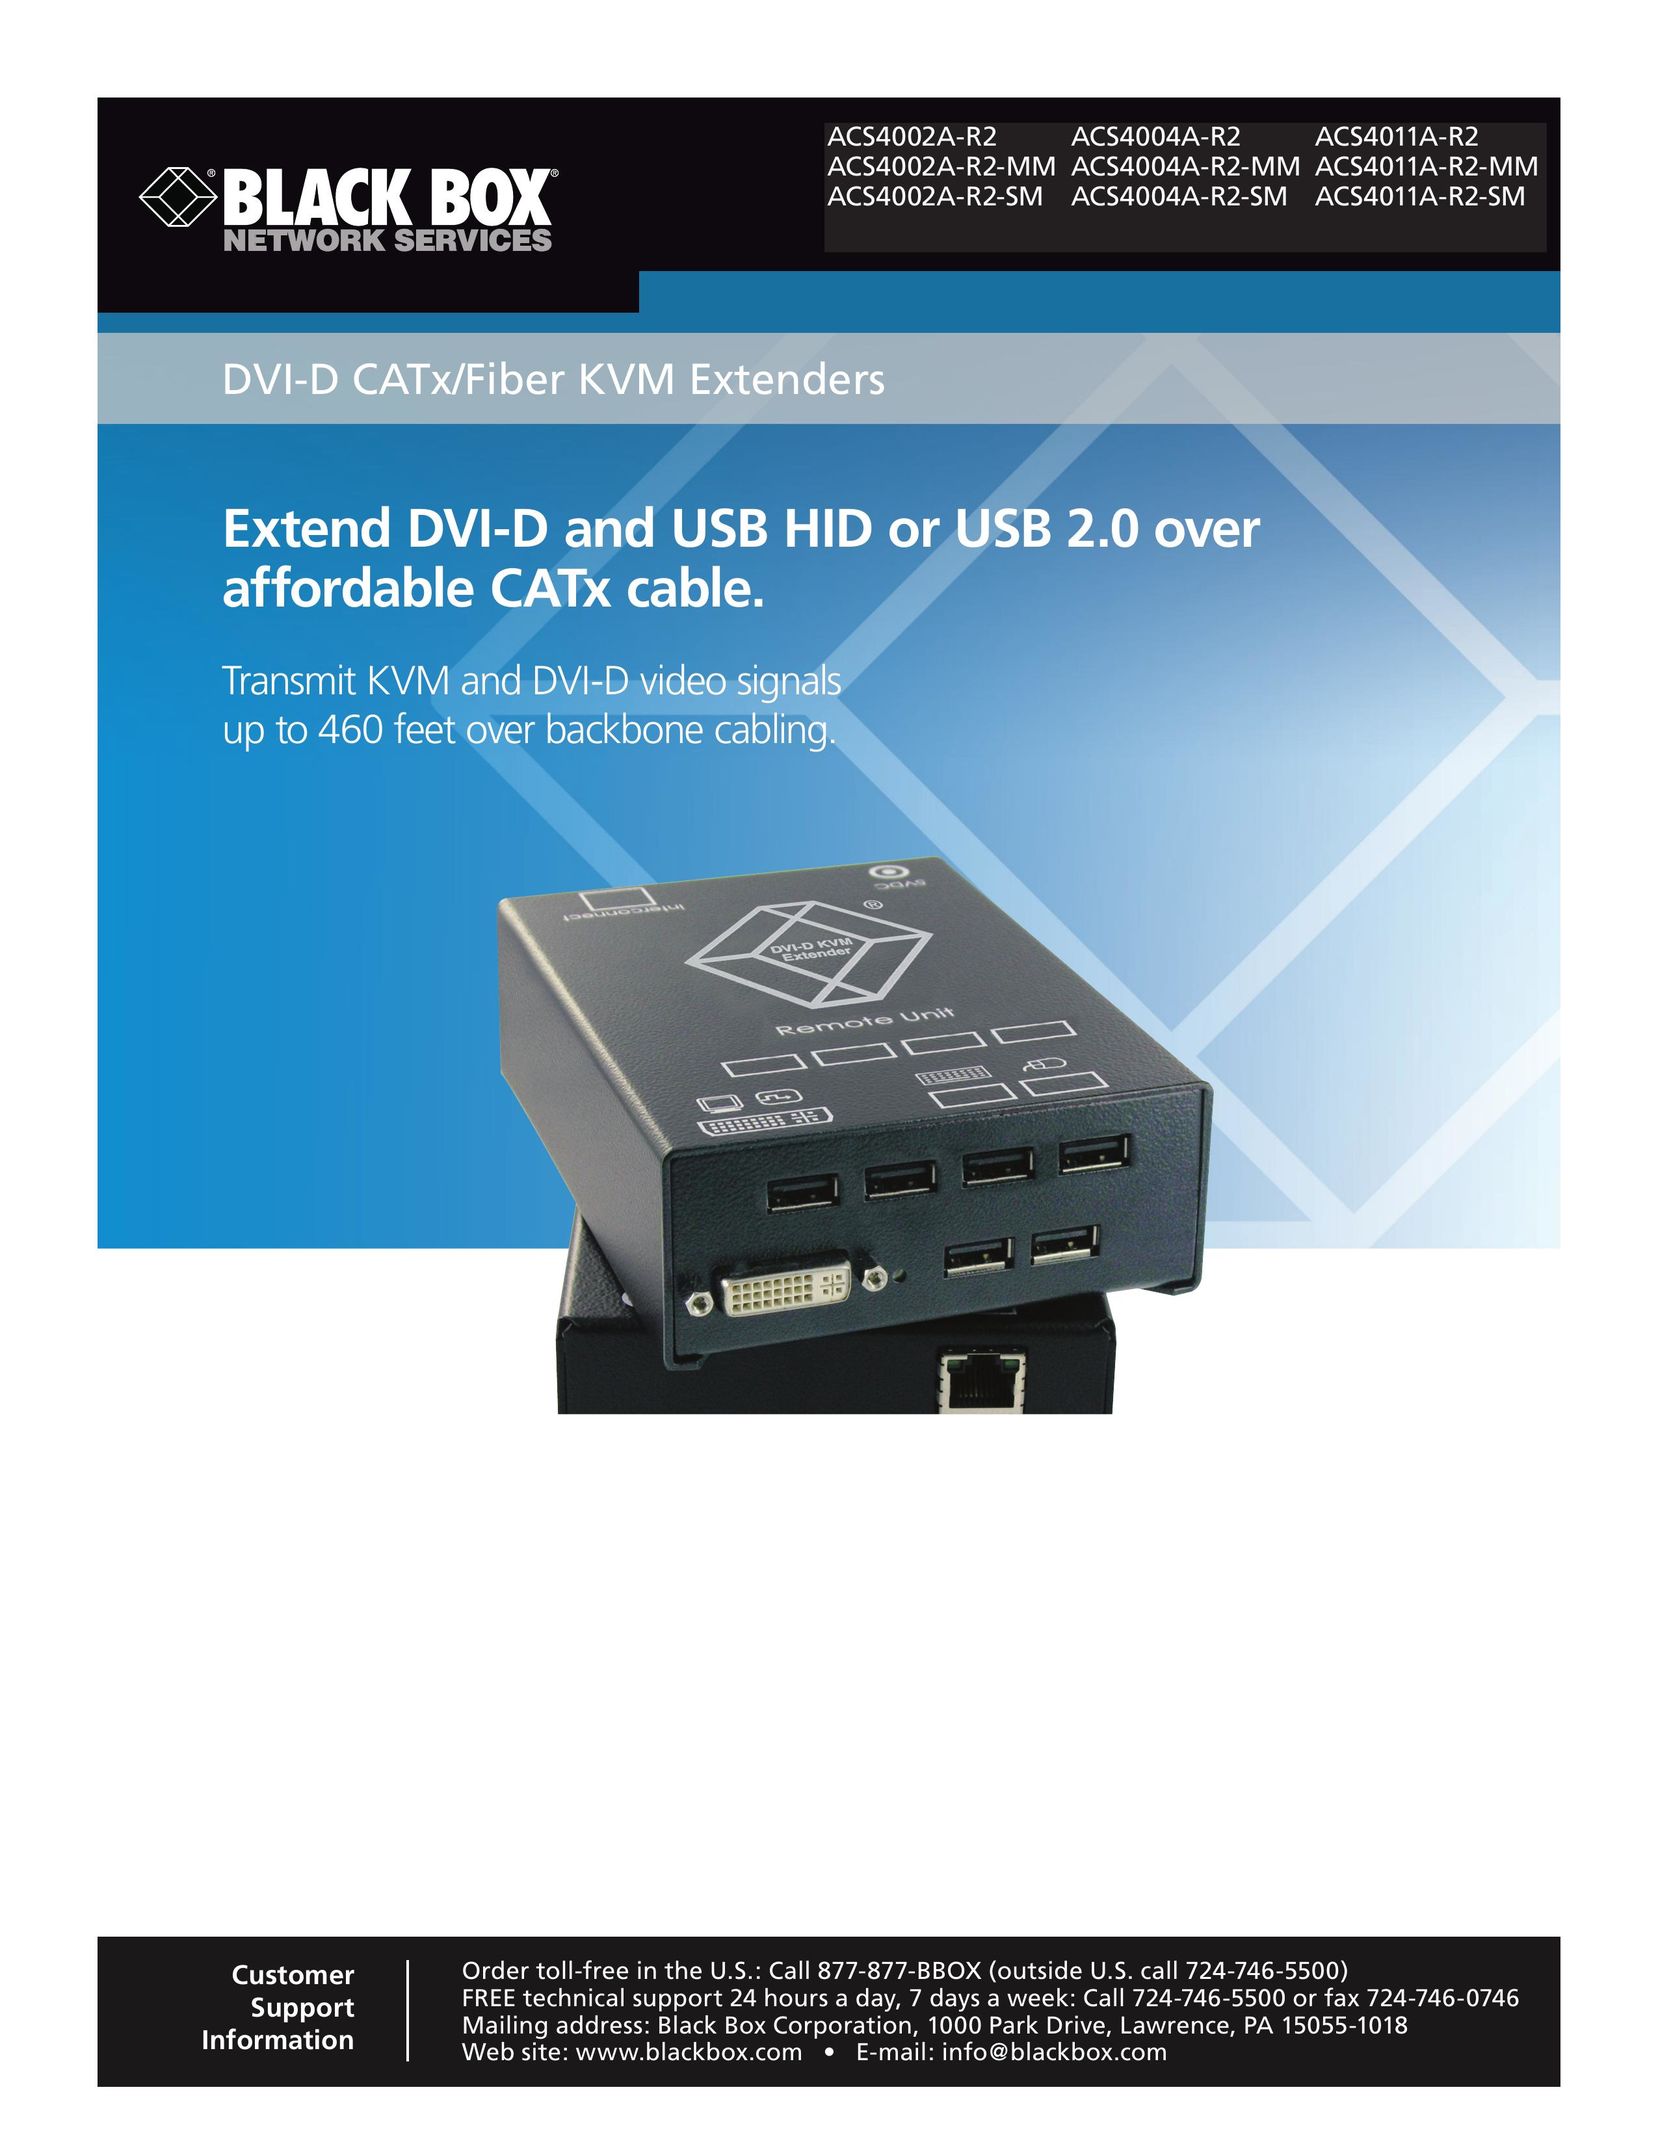 Black Box ACS4002A-R2 Network Hardware User Manual